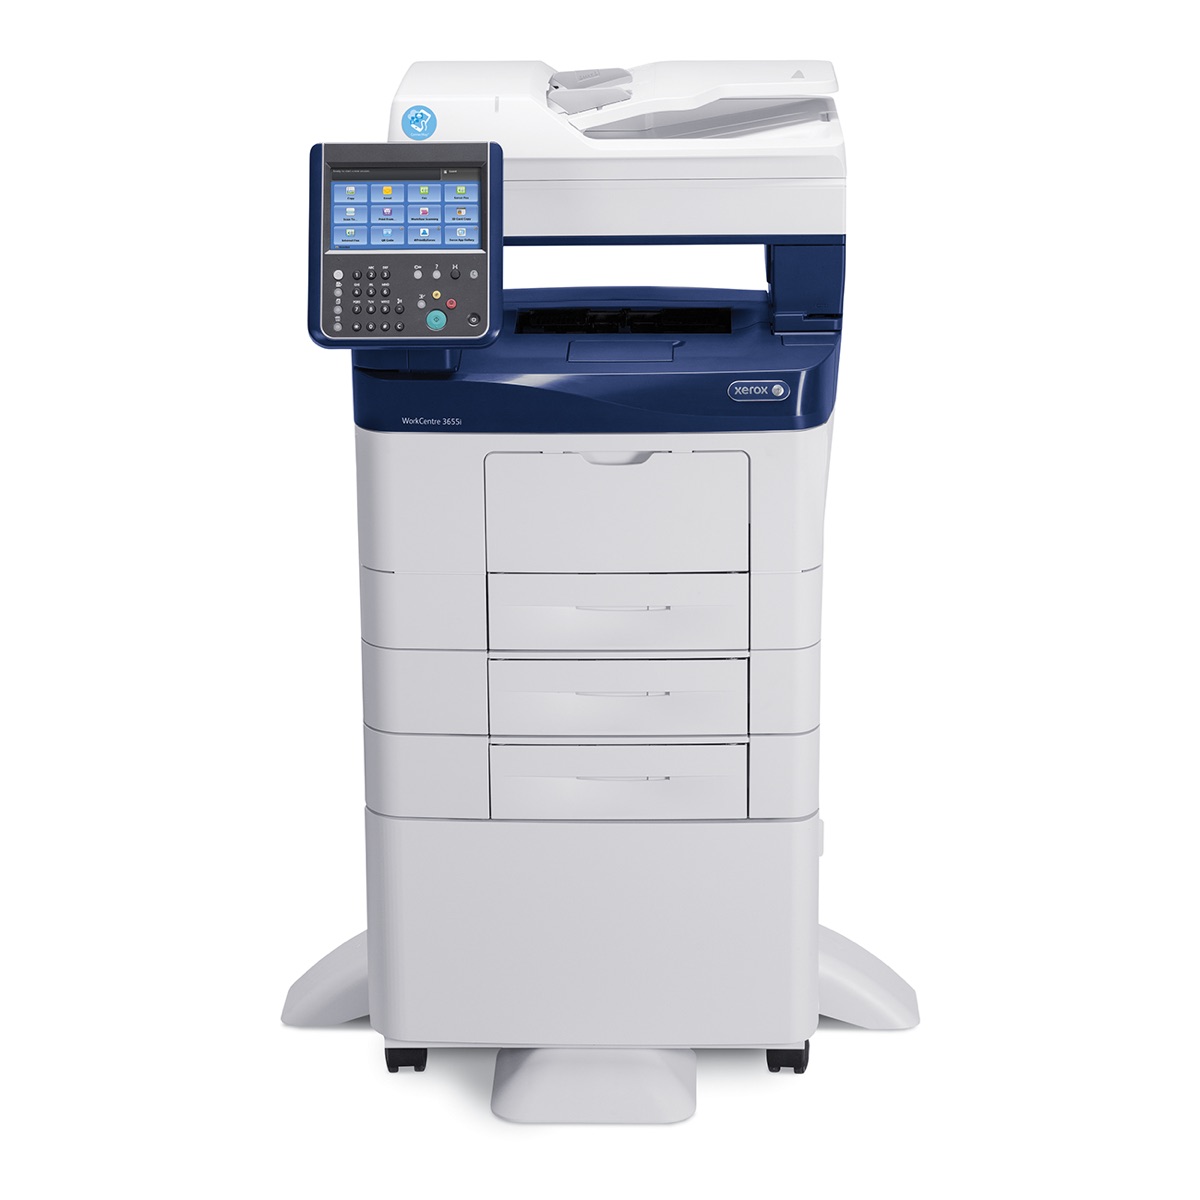 Xerox Copiers:  The Xerox REFURBISHED WC 3655i/X Copier